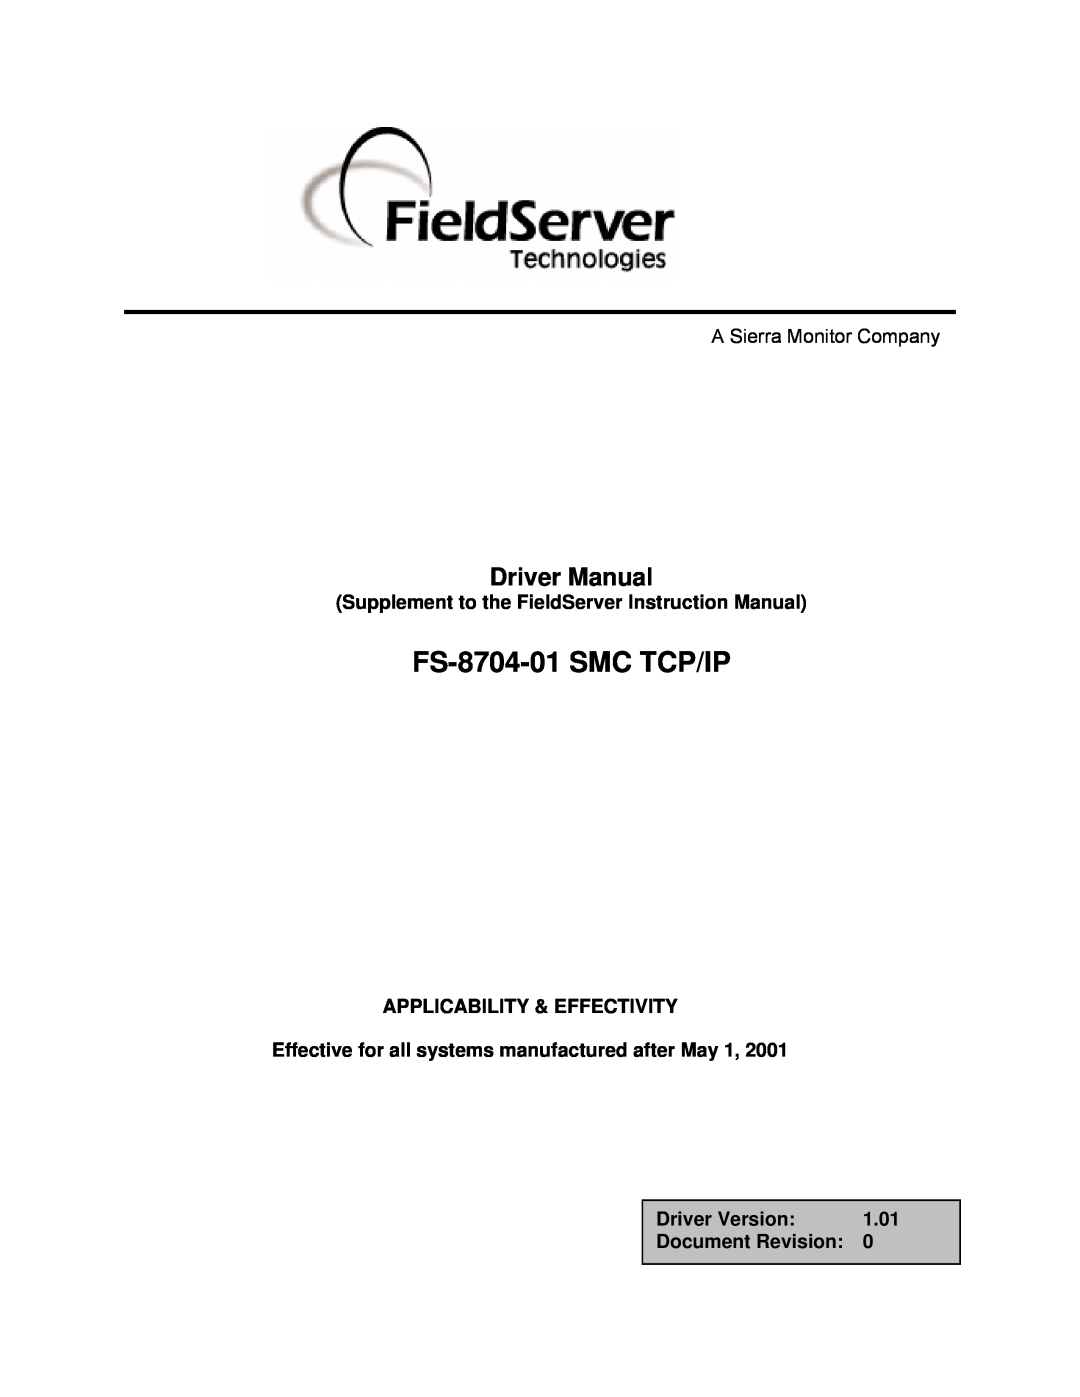 FieldServer instruction manual FS-8704-01 SMC TCP/IP, Driver Manual 